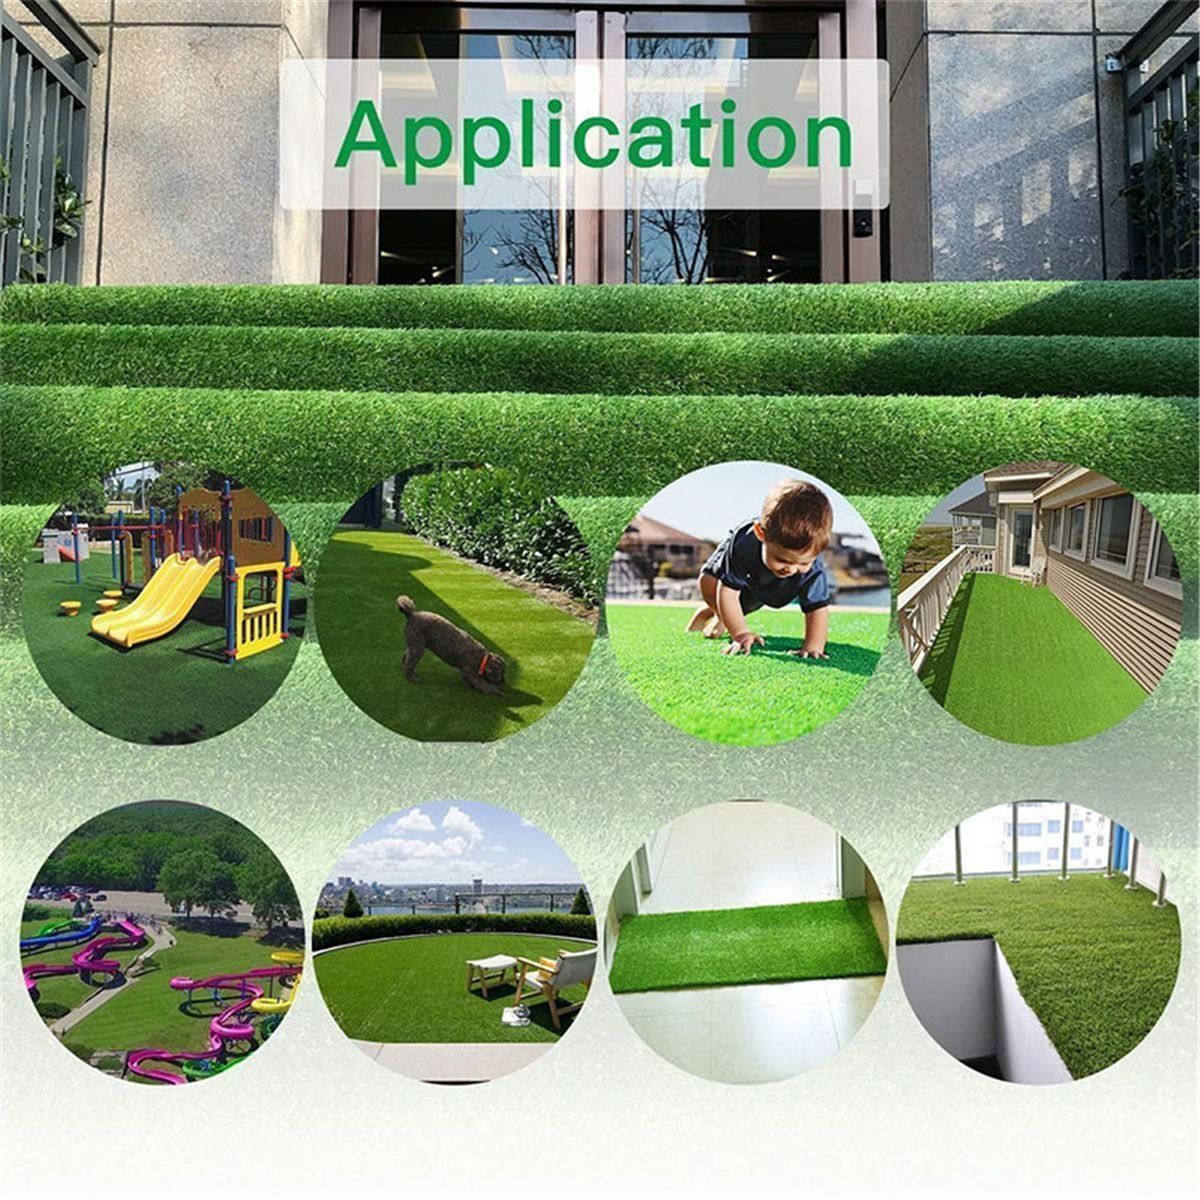 20mm-Artificial-Grass-Mat-Lawn-Synthetic-Green-Yard-Garden-Indoor-Outdoor-1739018